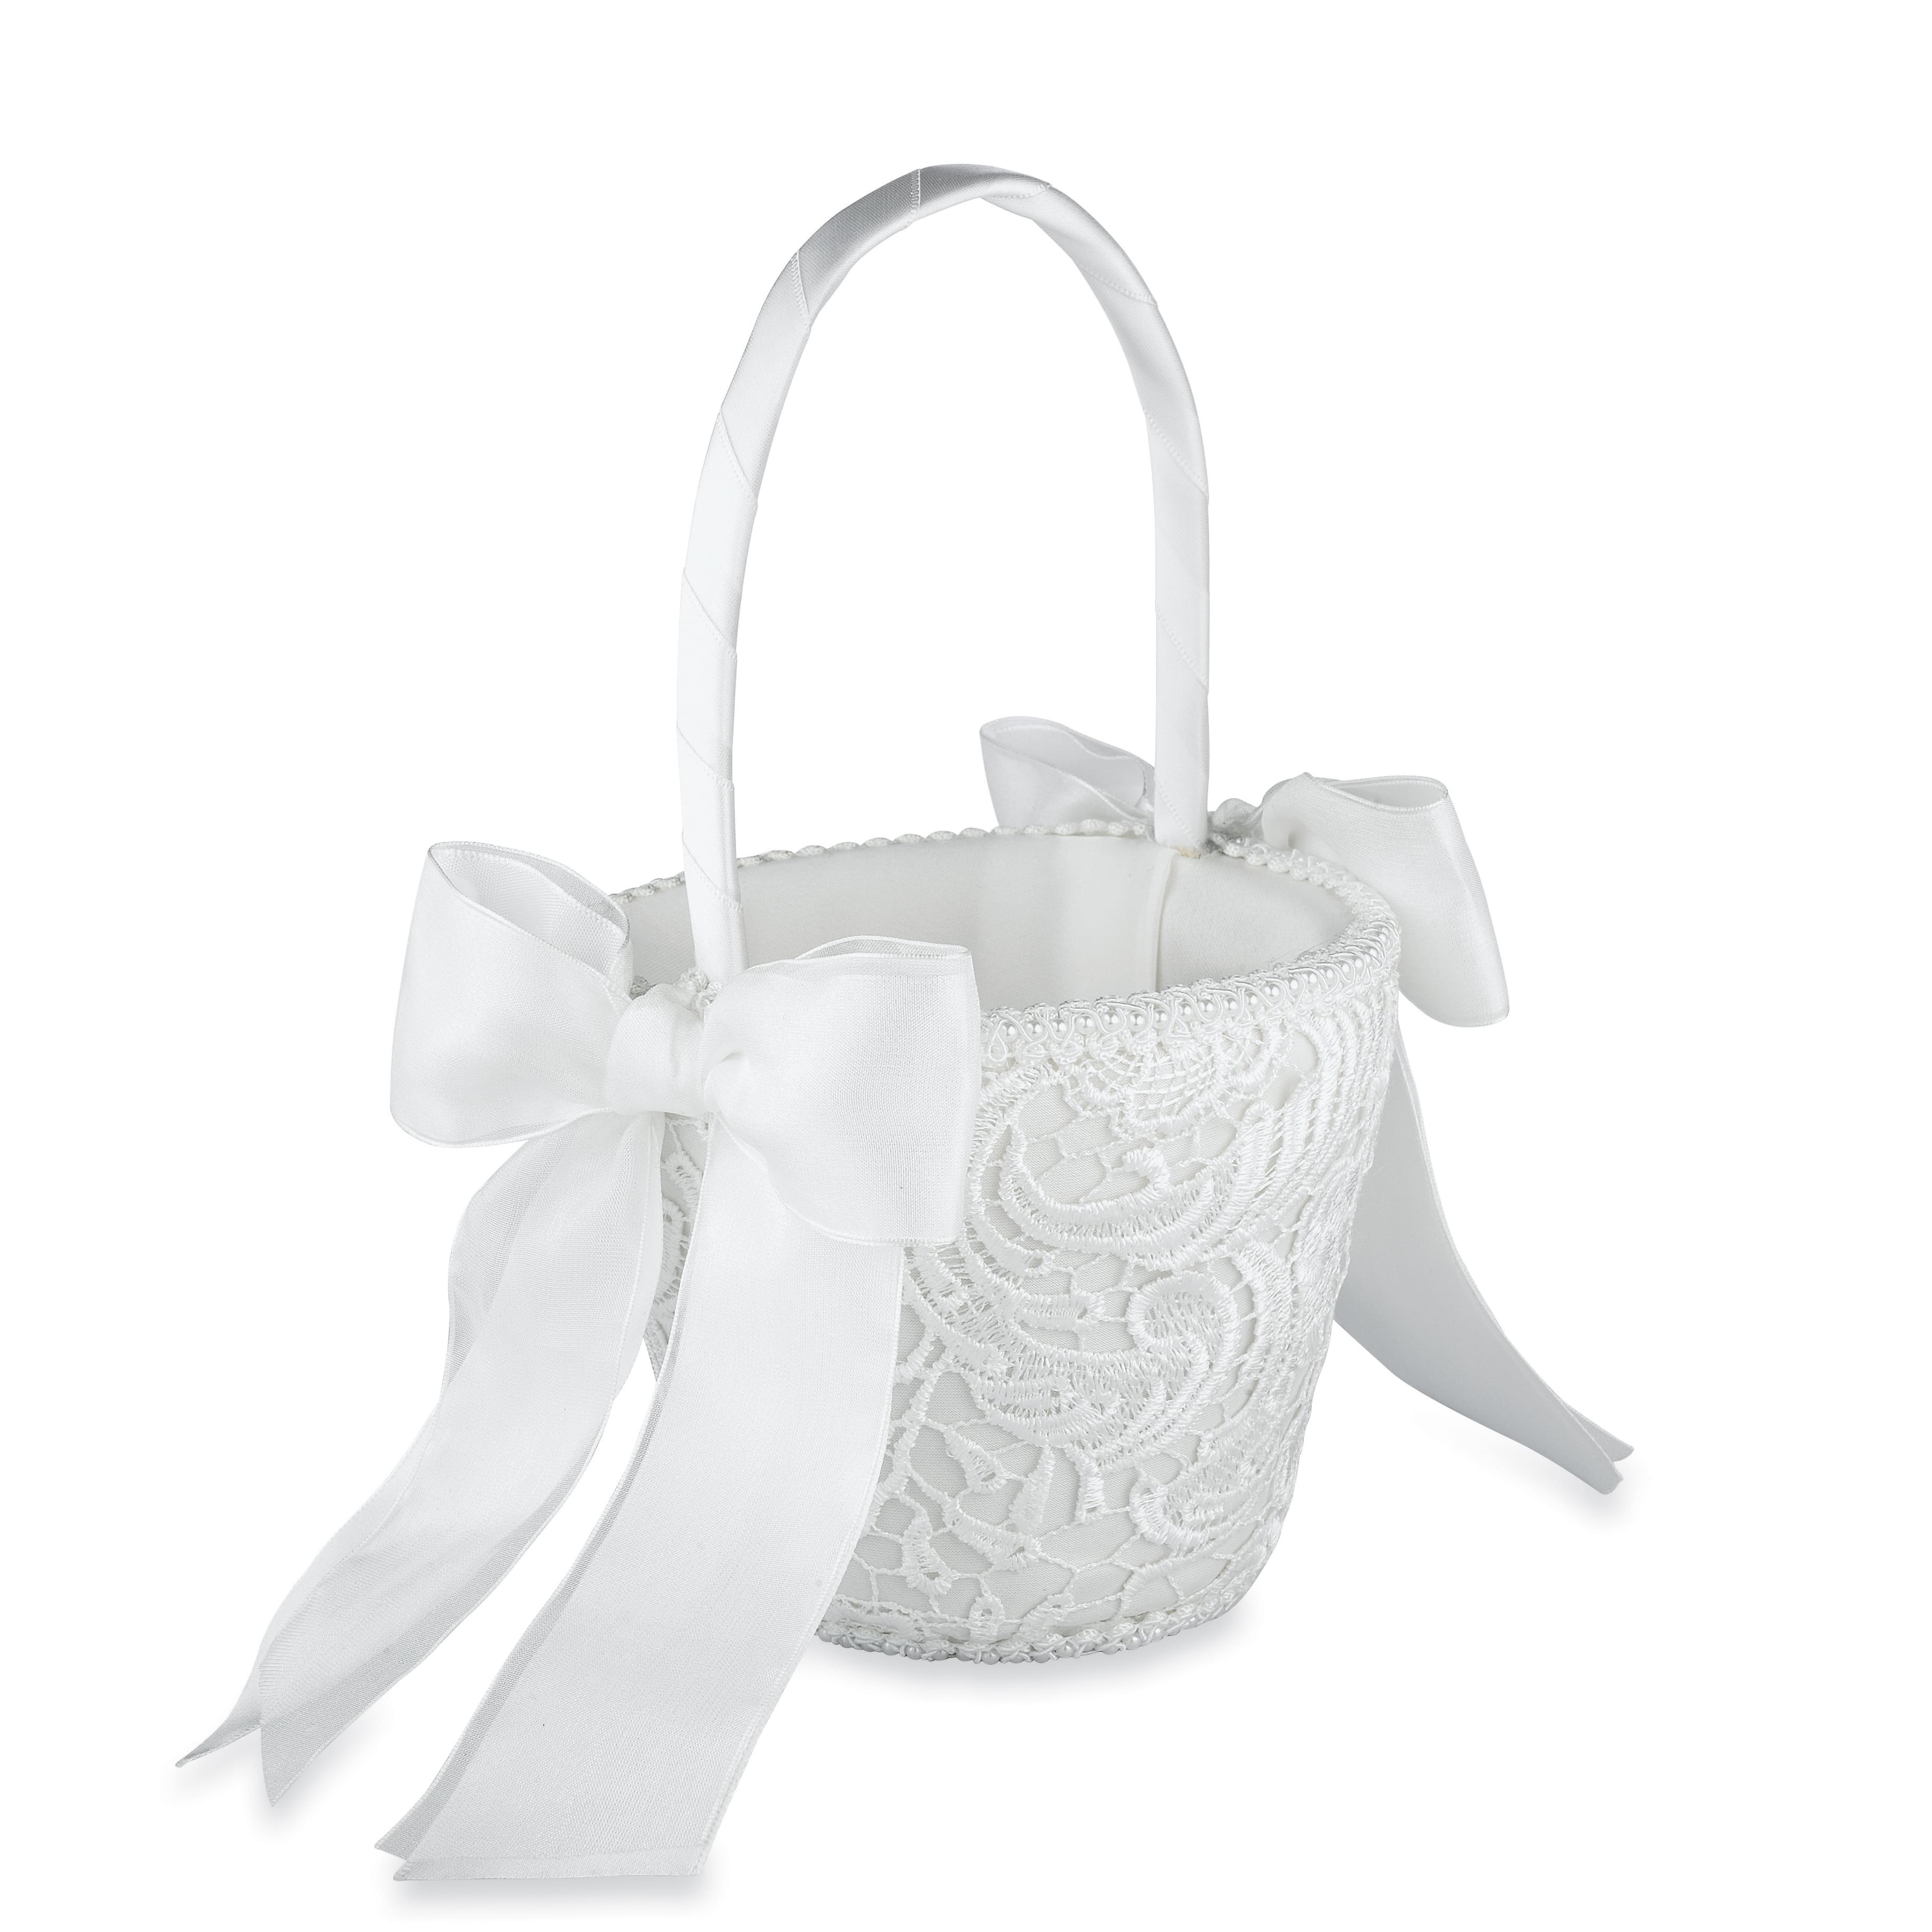 Bridal Wedding Party Flower Girl Basket White Lace Basket Ceremony Portable 